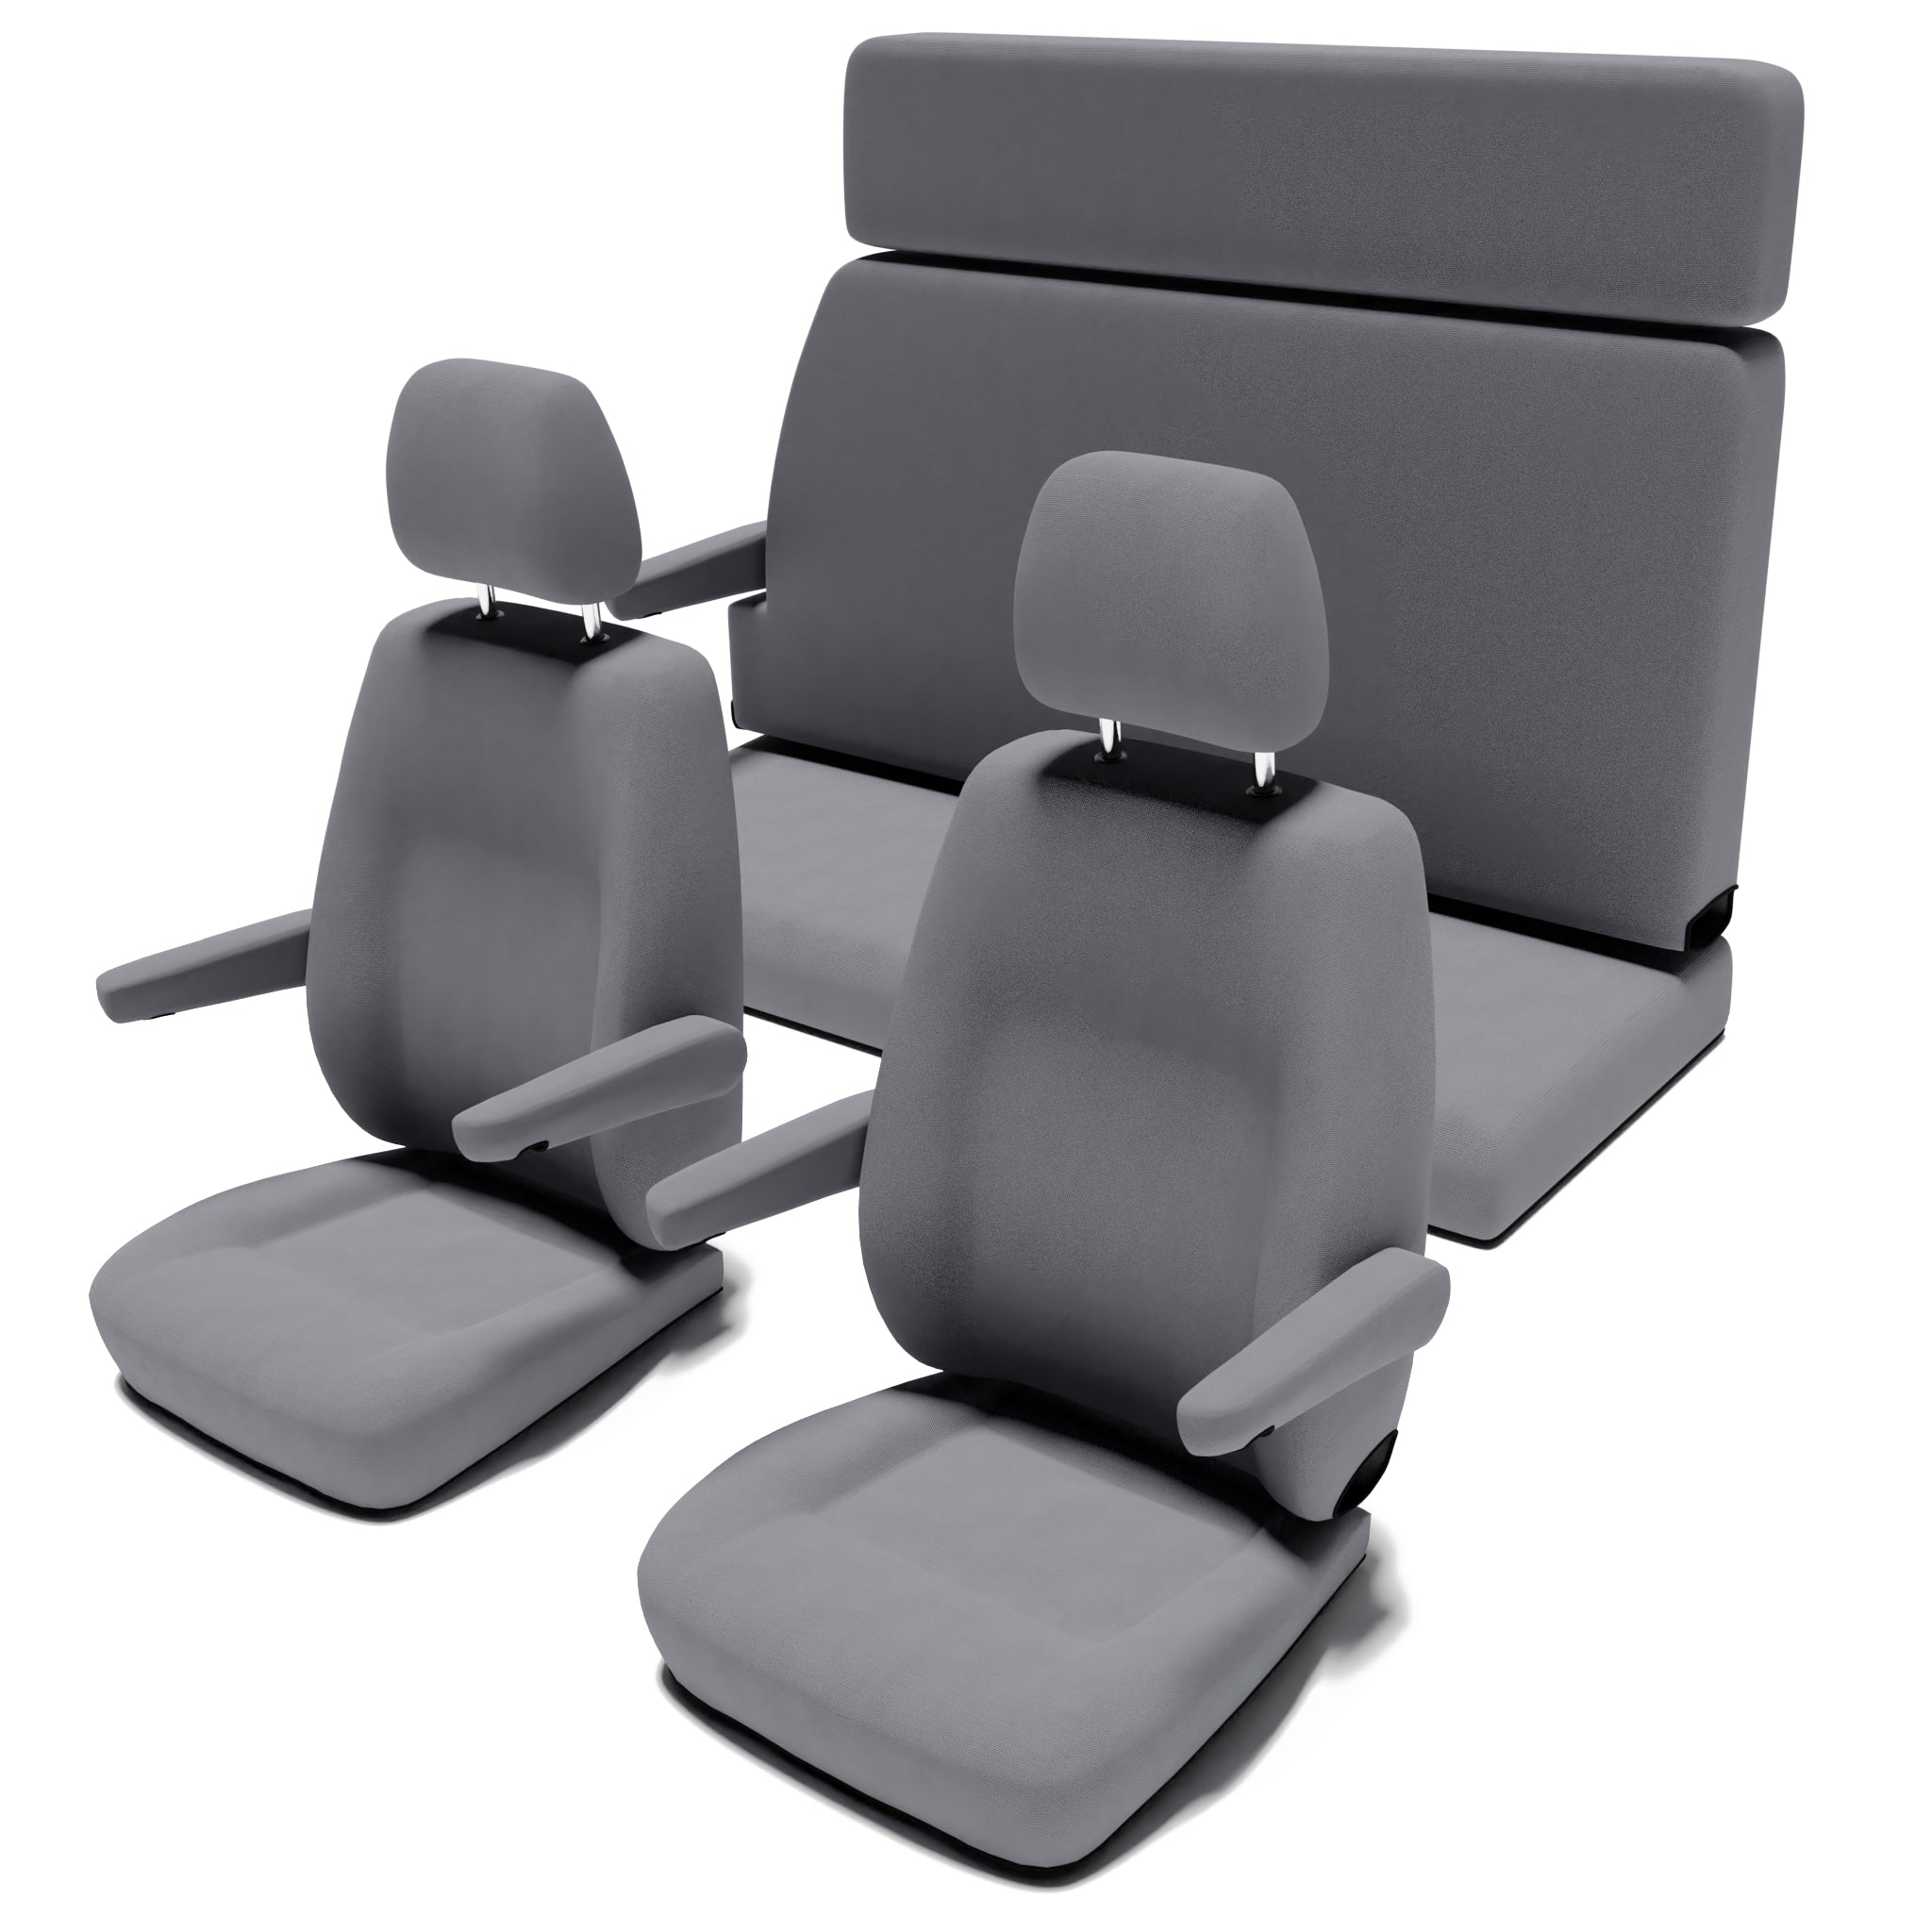 DriveDressy Sitzbezüge - Ford Nugget Vordersitz ab 2019 